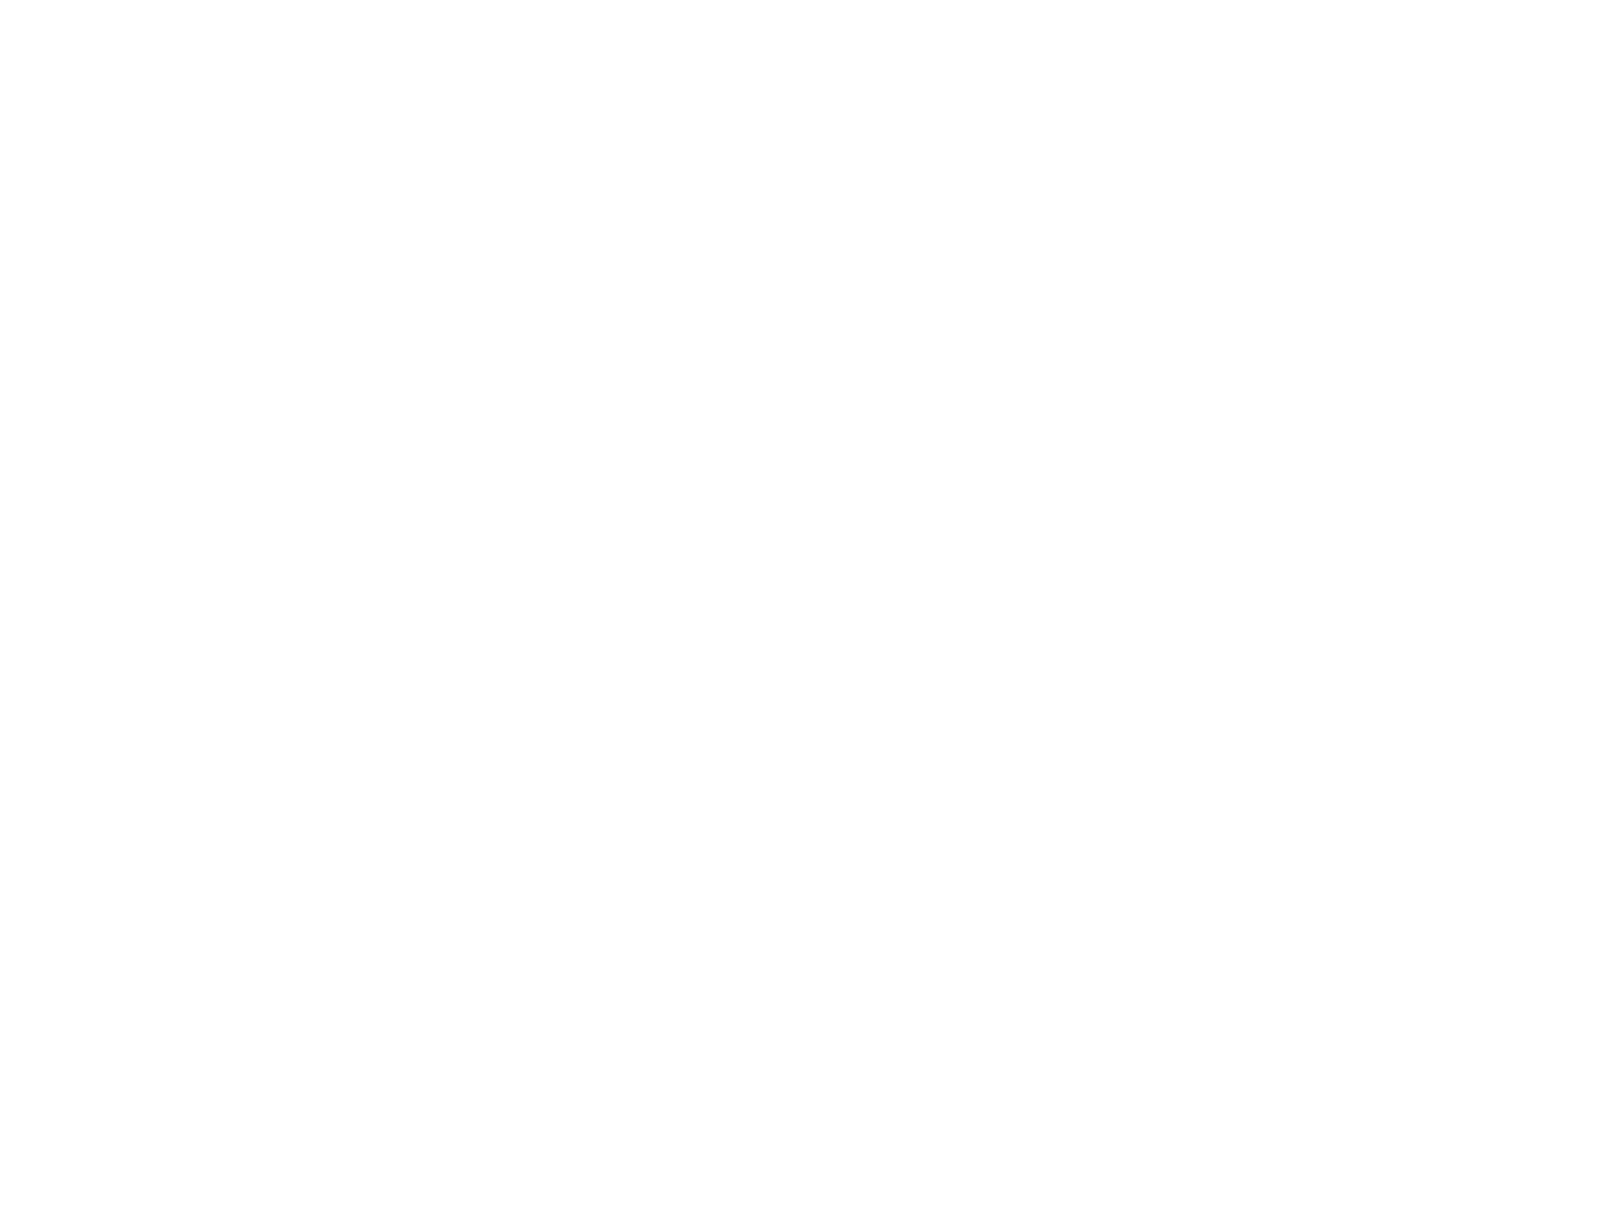 Center circle